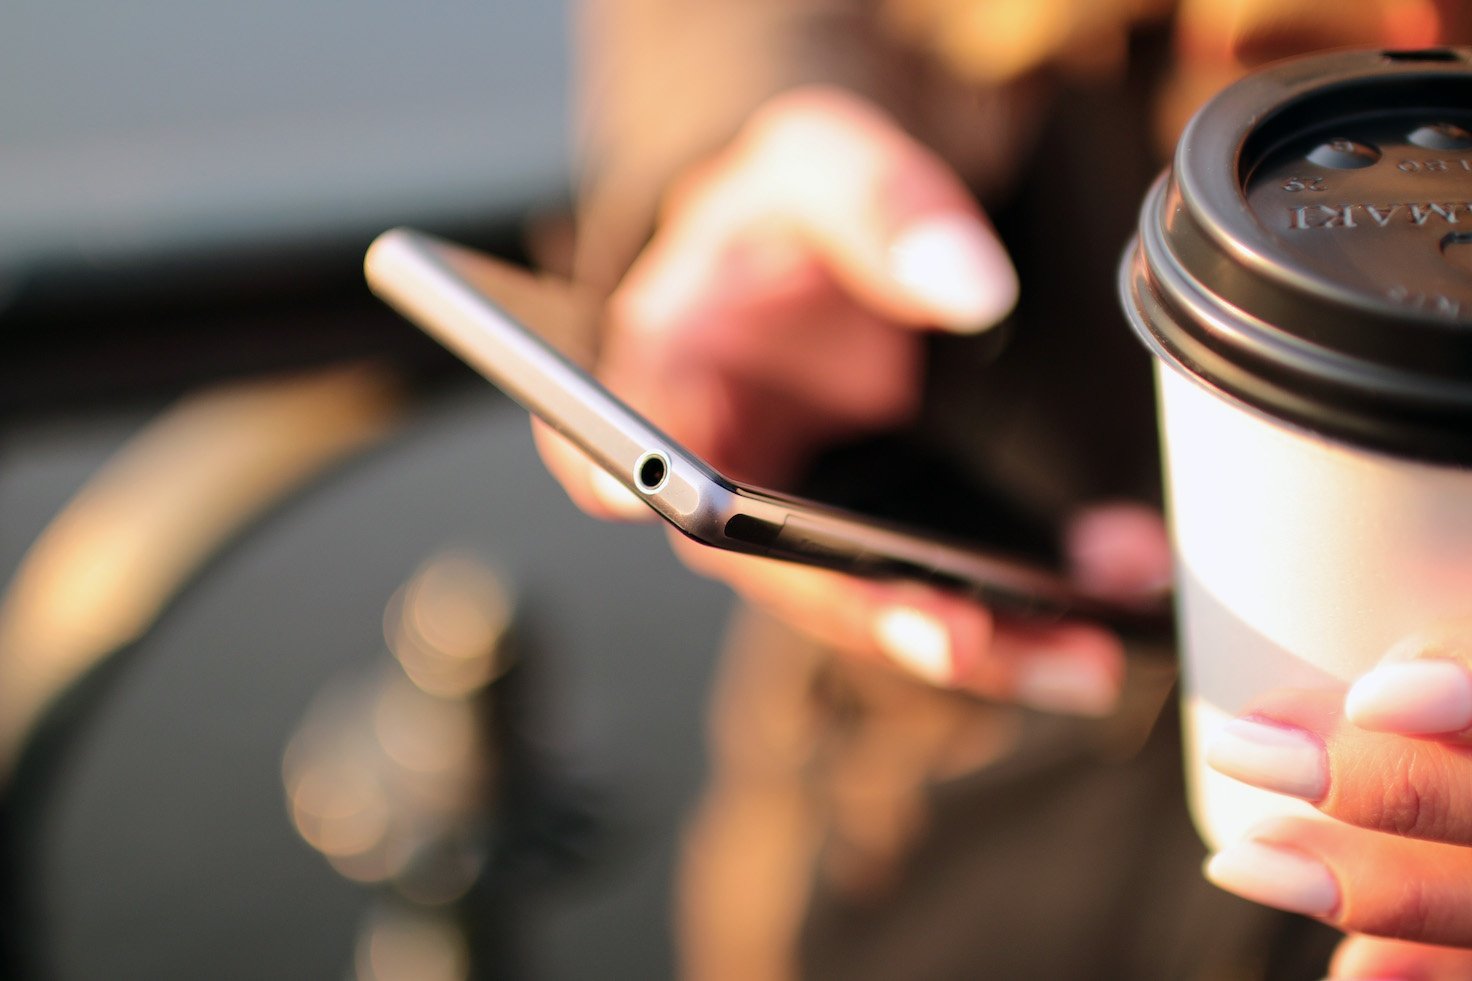 hands-coffee-smartphone-technology resized.jpg